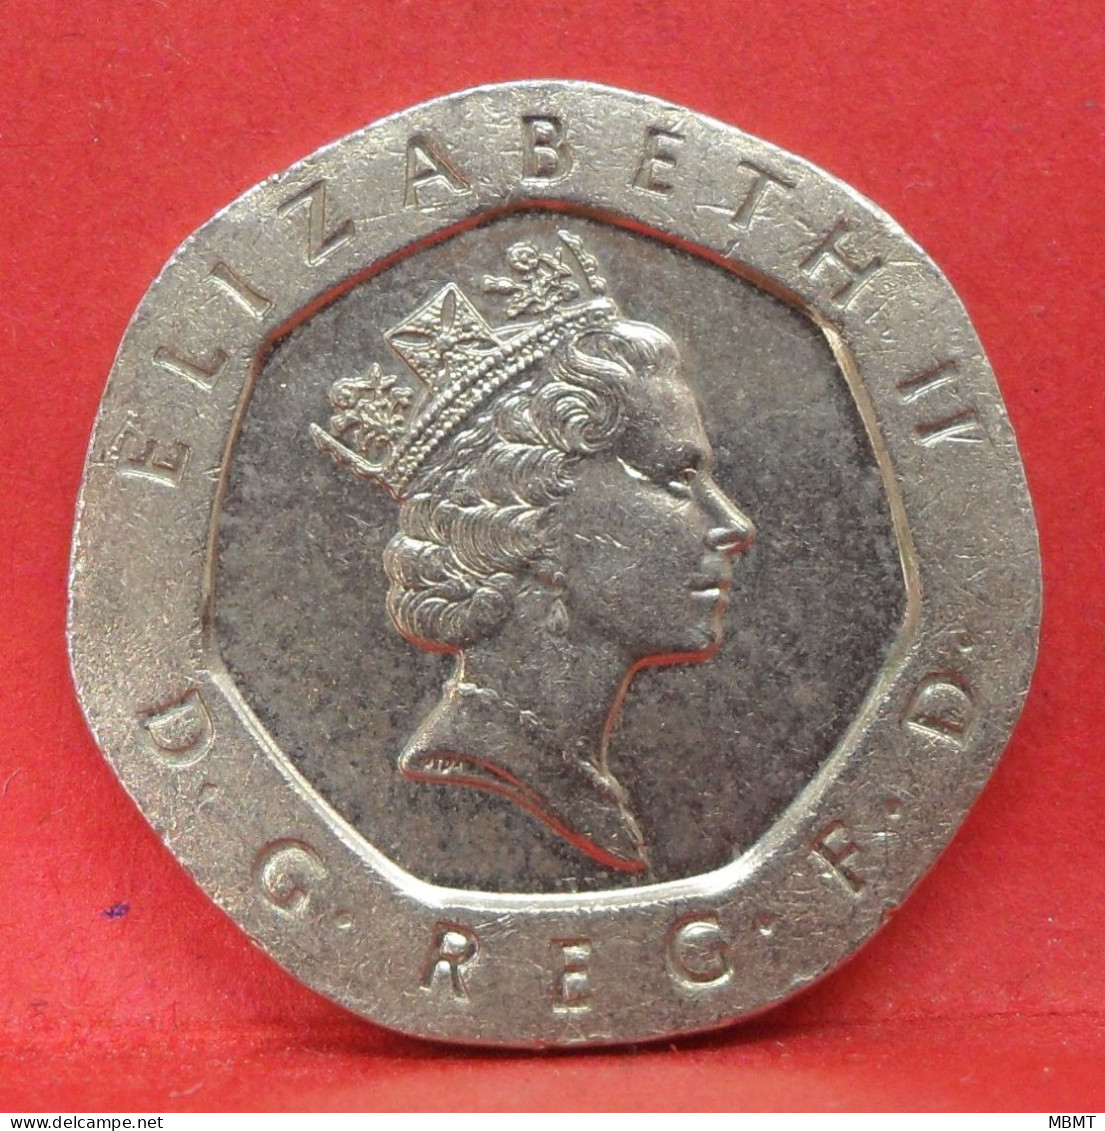 20 Pence 1994 - TTB - Pièce Monnaie Grande-Bretagne - Article N°2832 - 20 Pence